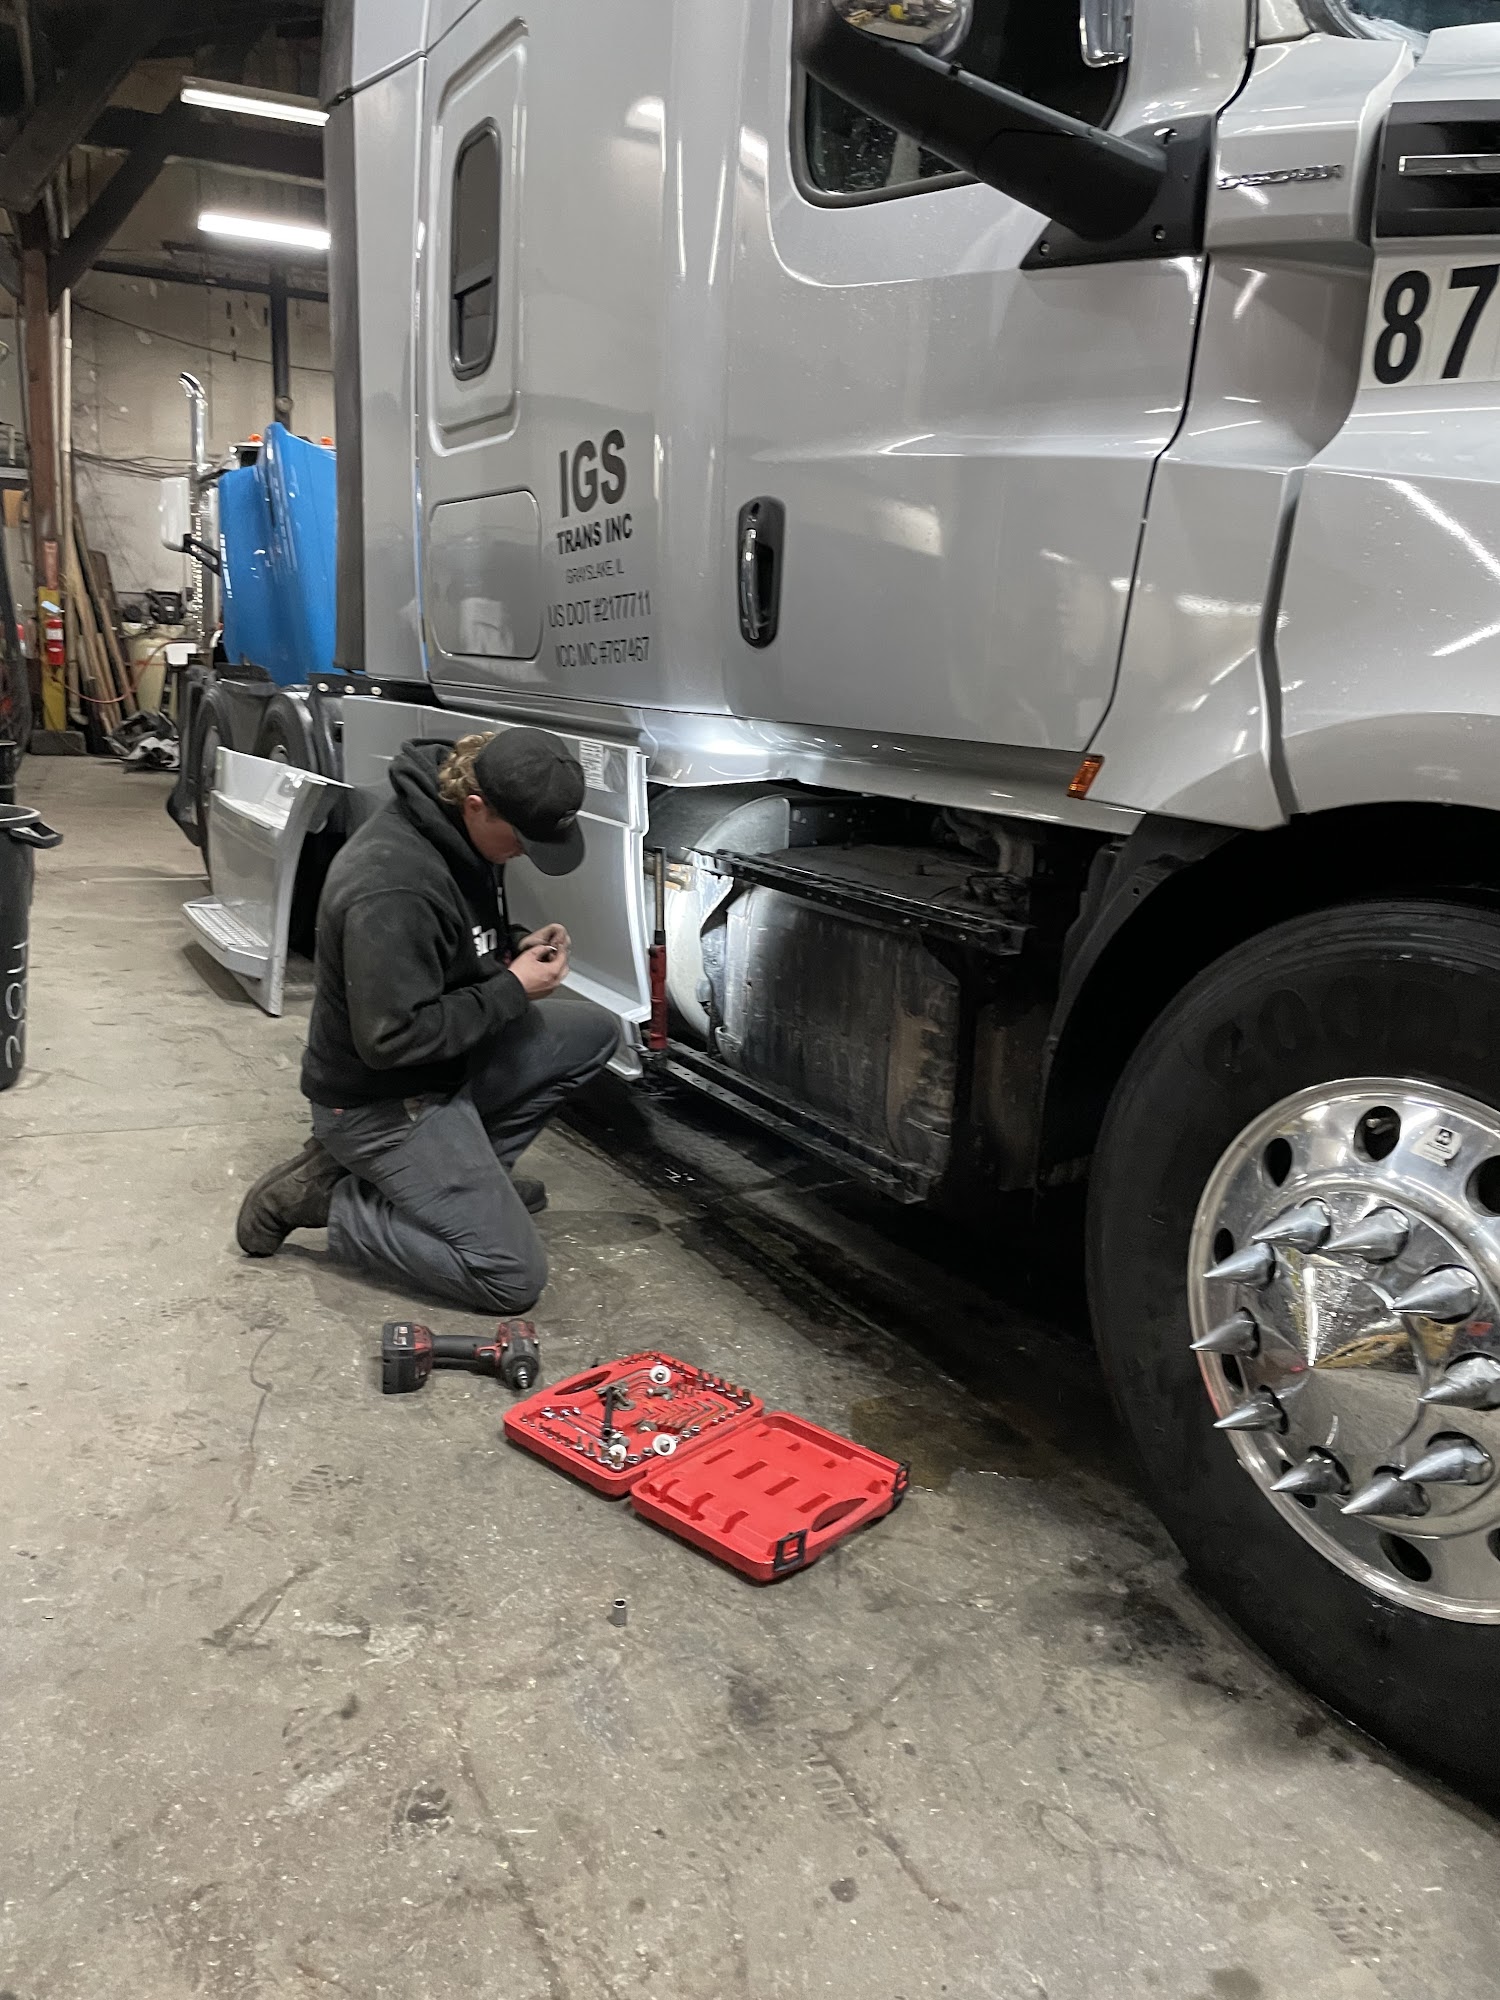 Highspire Auto & Truck Repair